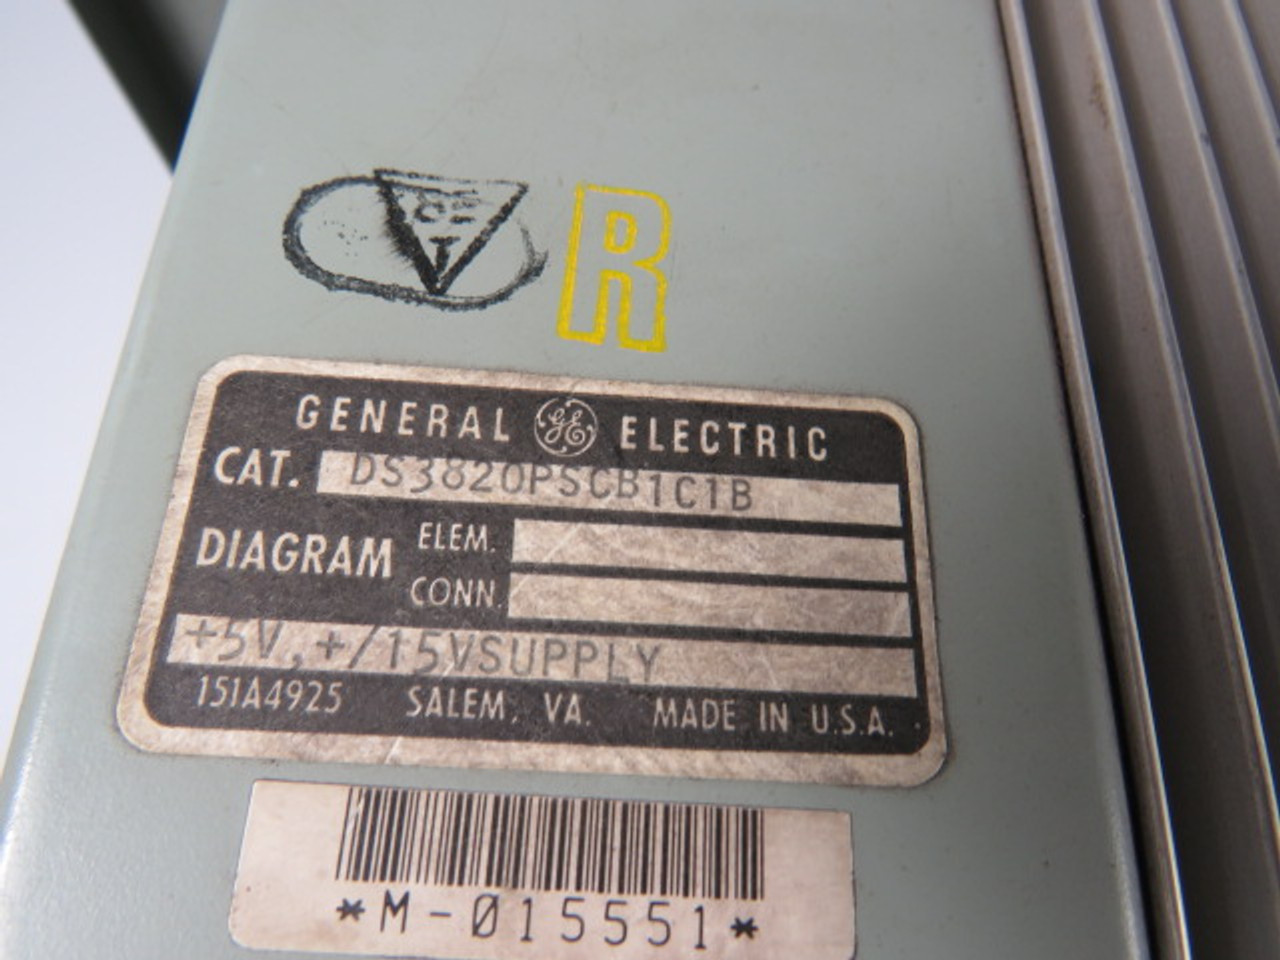 General Electric DS3820PSCB1C1B Mark IV Power Supply 5V -15V +15V USED